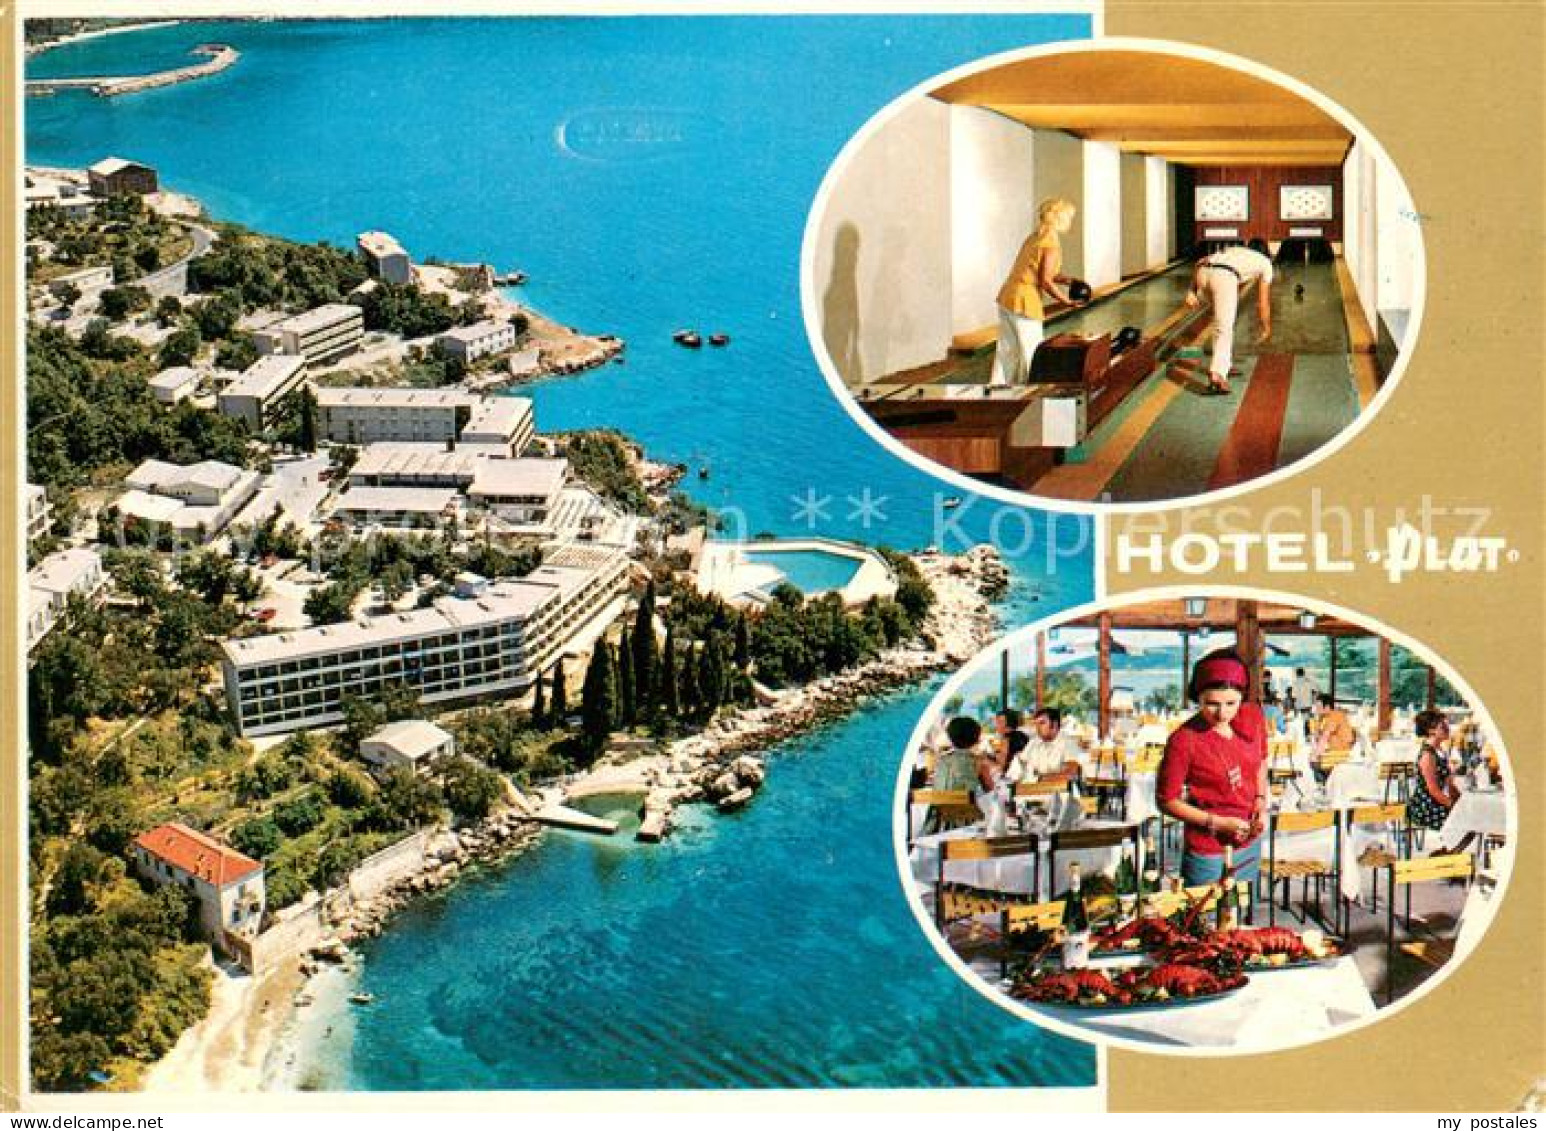 73648869 Dubrovnik Ragusa Hotel Plat Restaurant Kegelbahn Strand Kueste Fliegera - Kroatien